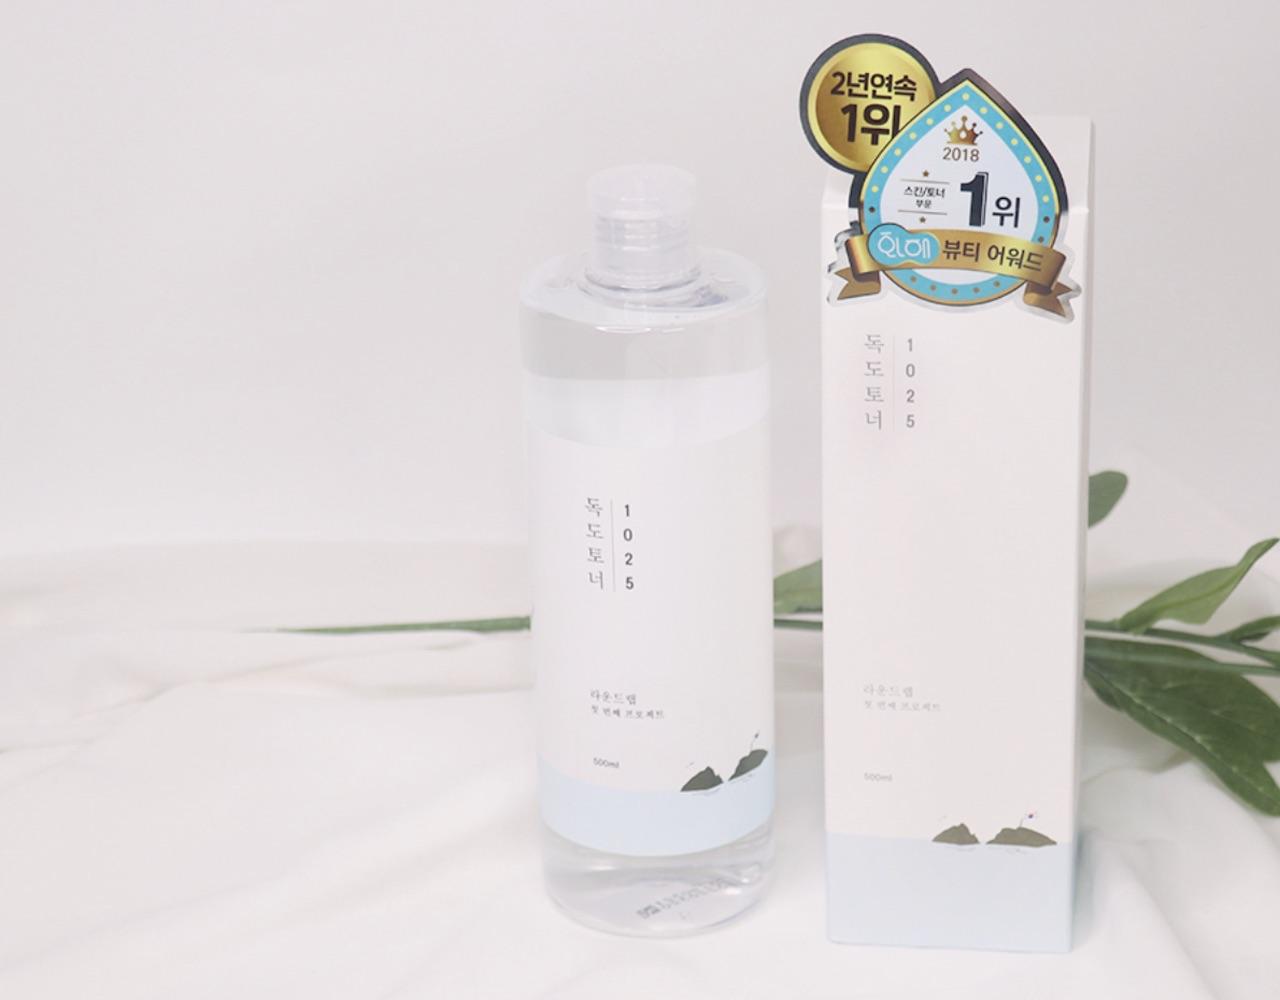 Korean brand round lab's dokdo toner bottle and packaging 